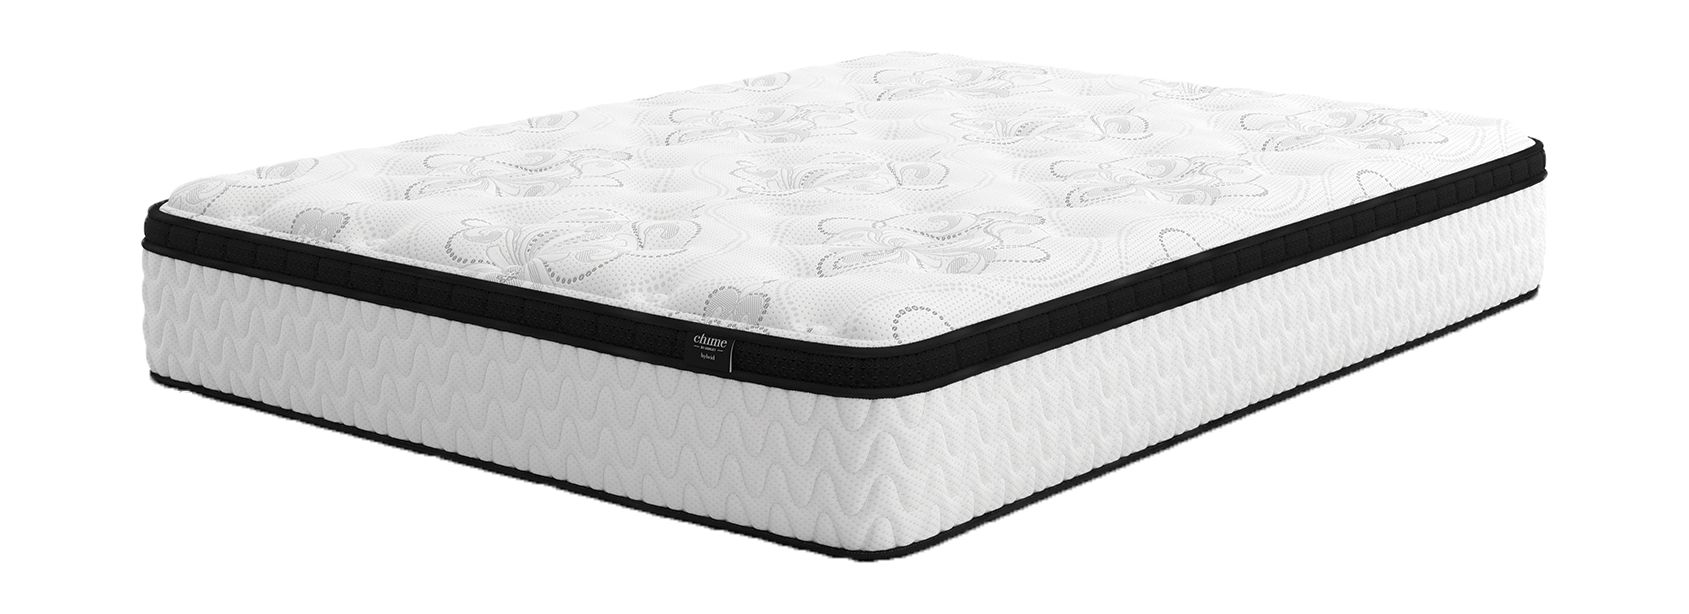 chime 12 inch hybrid white king mattress